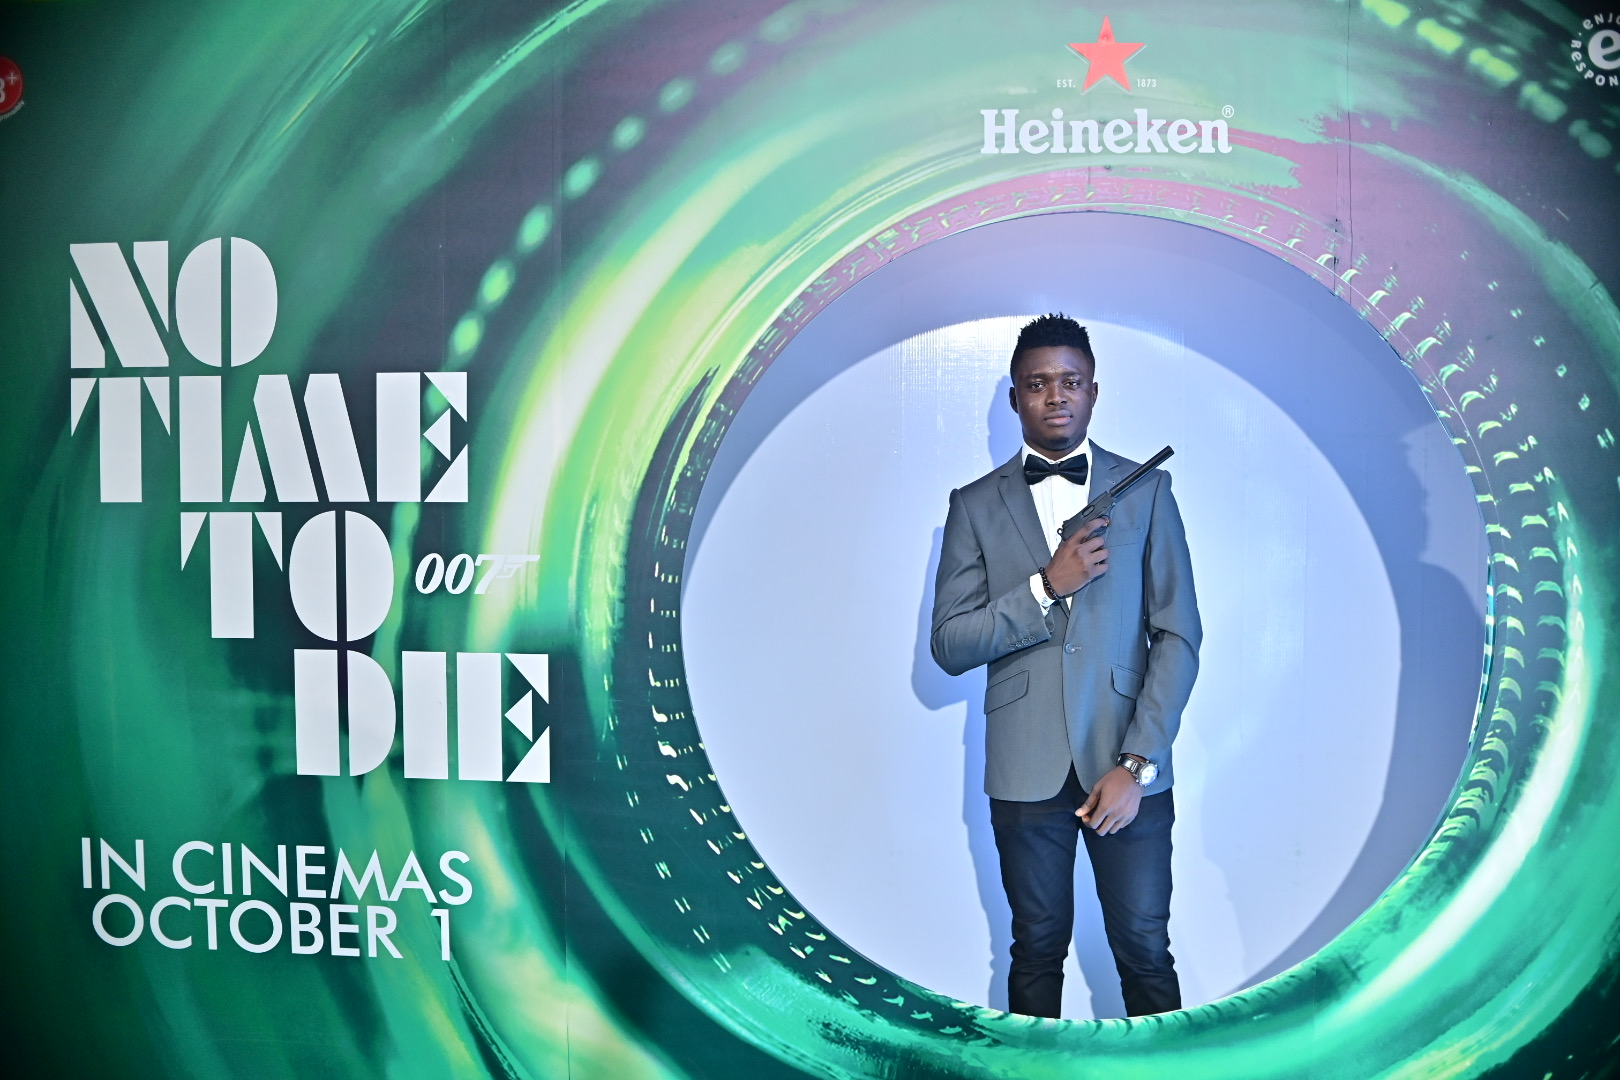 Heineken hosts James Bond No Time To Die movie screening in grand style